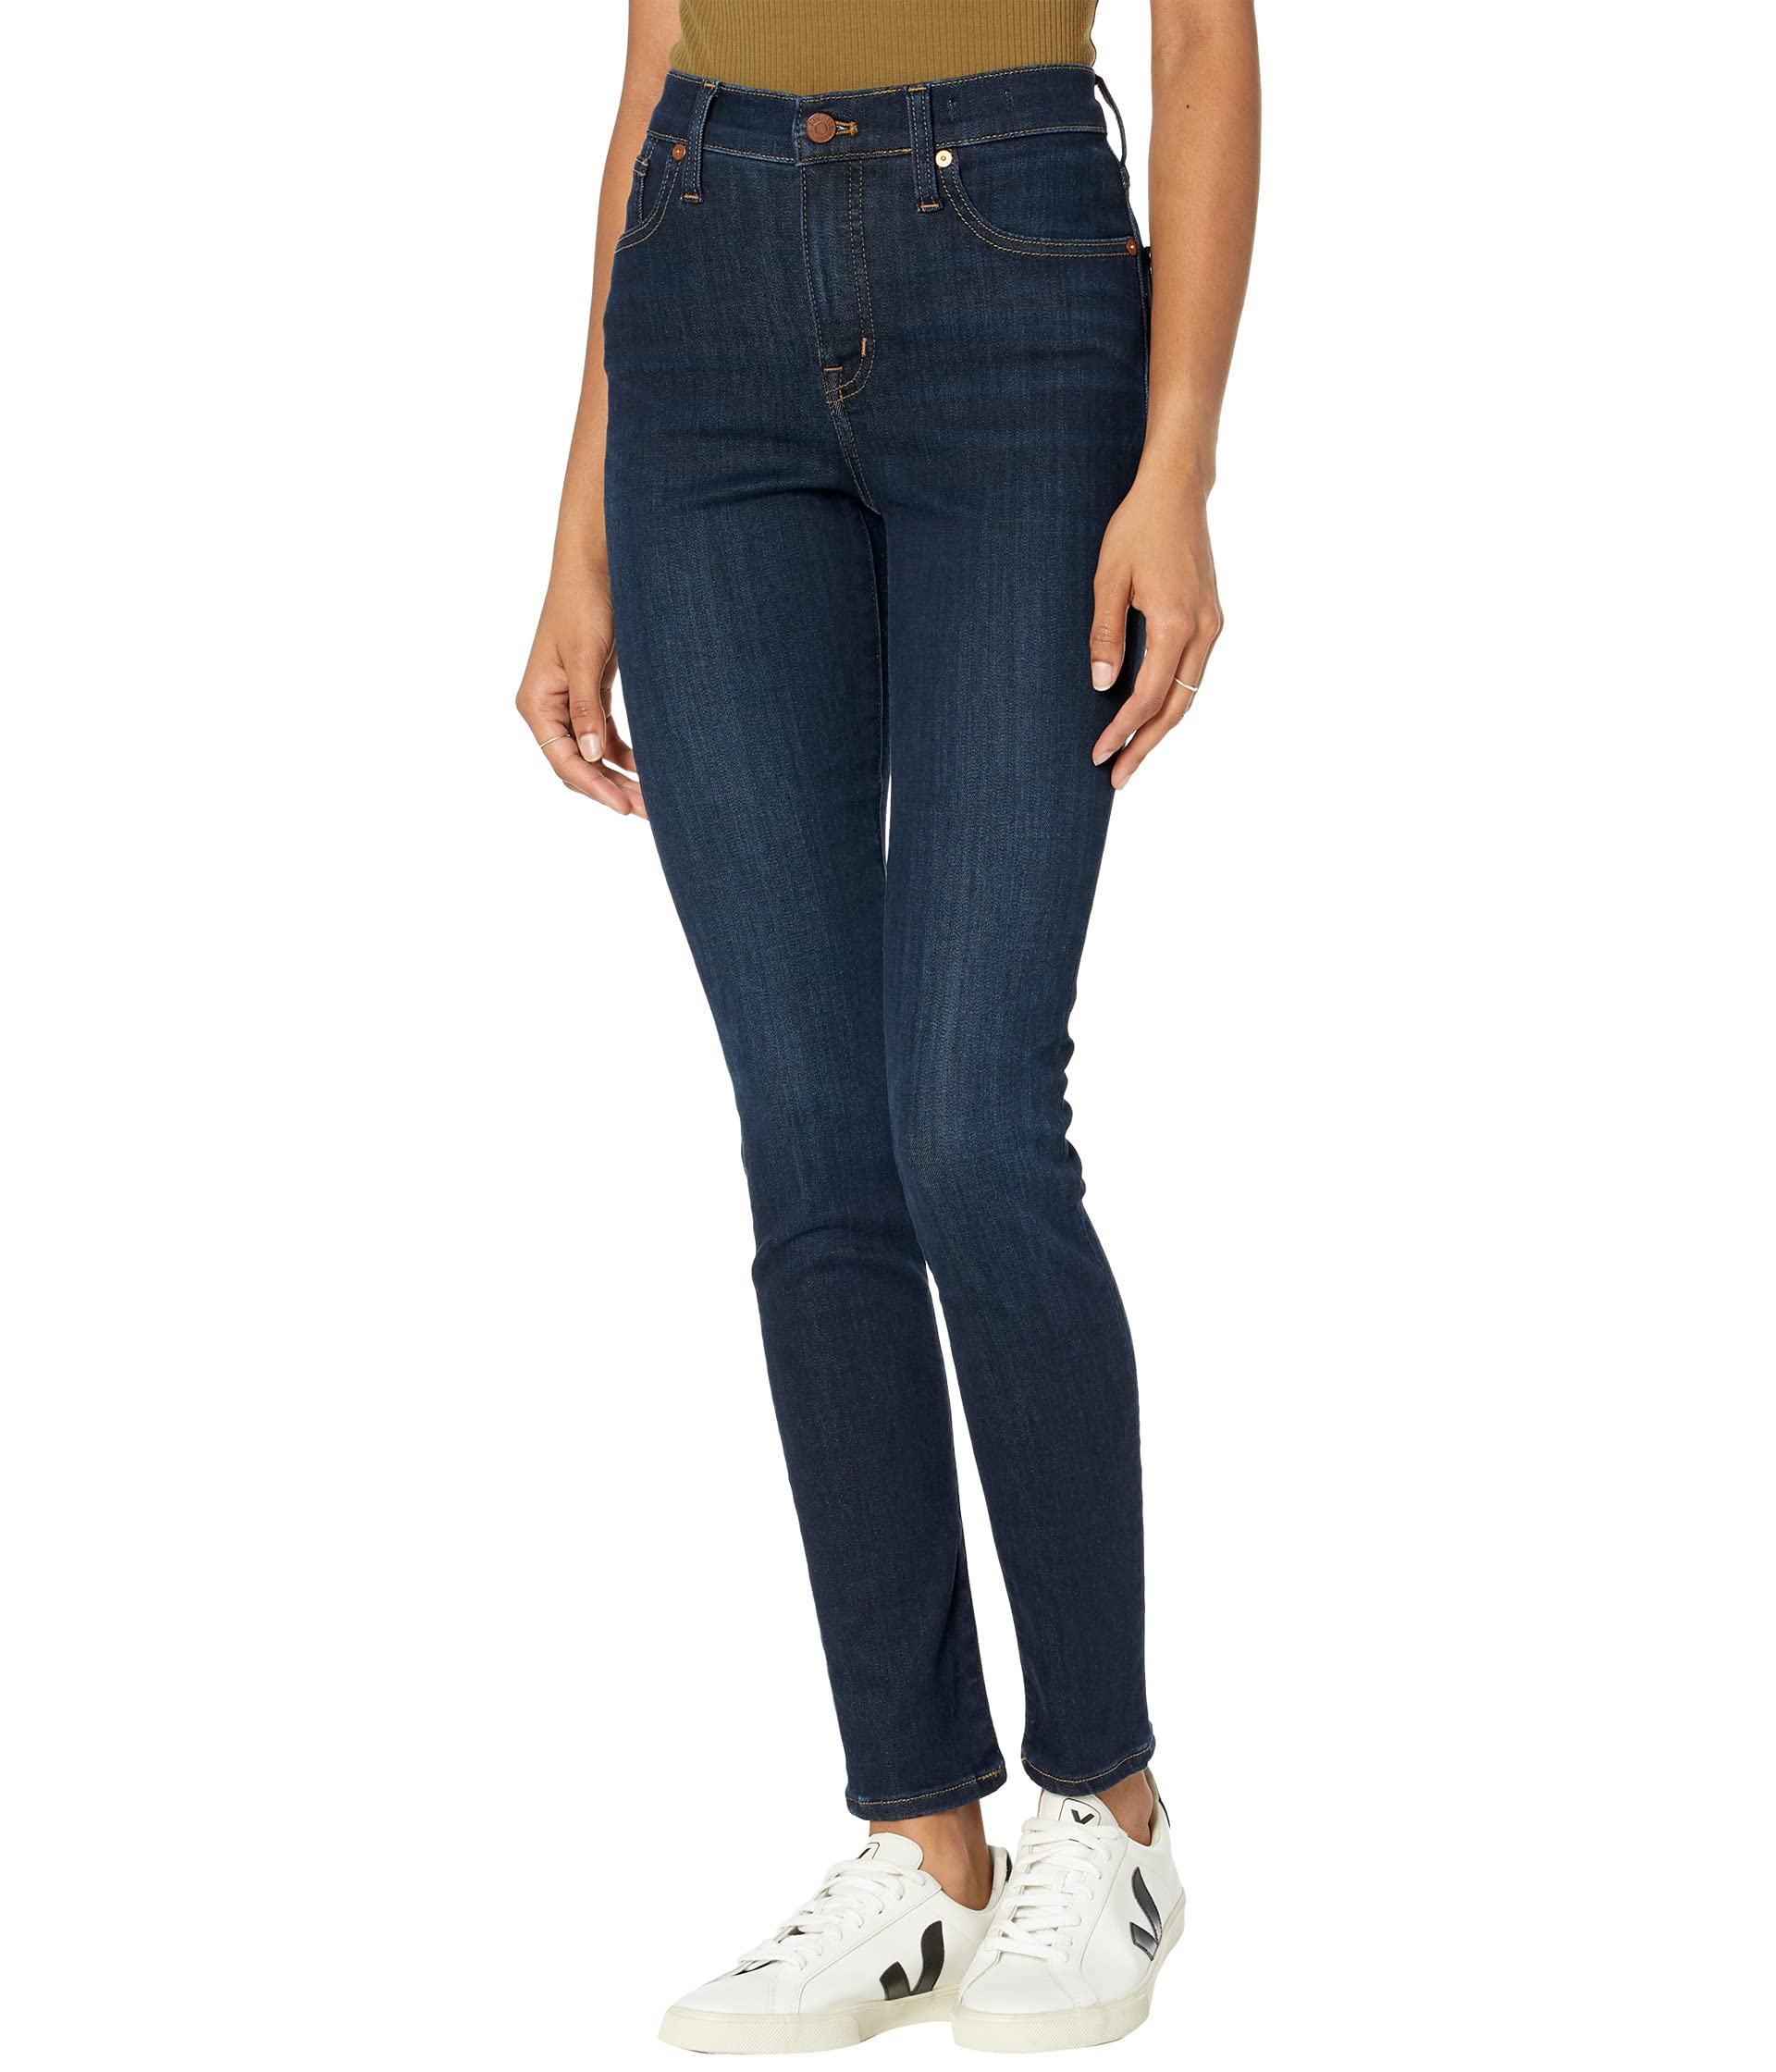 Джинсы Madewell, Tall 9 Mid-Rise Skinny Jeans in Larkspur Wash: Tencel Denim Edition